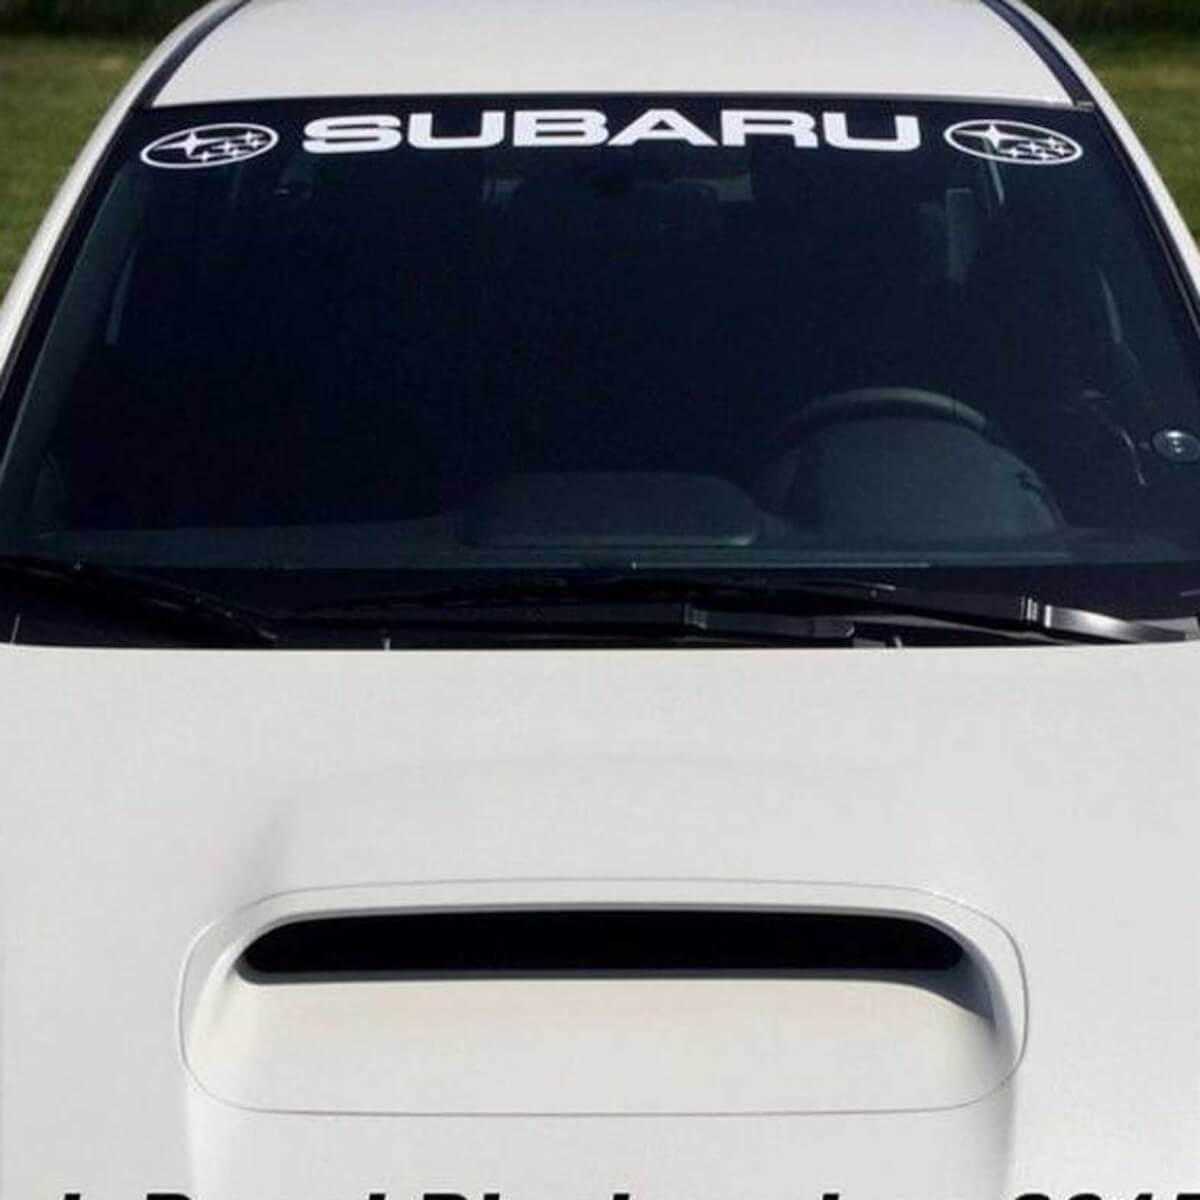 Subaru Windshield Sticker Banner Decal Vinyl Rally Window Graphic WRX STI